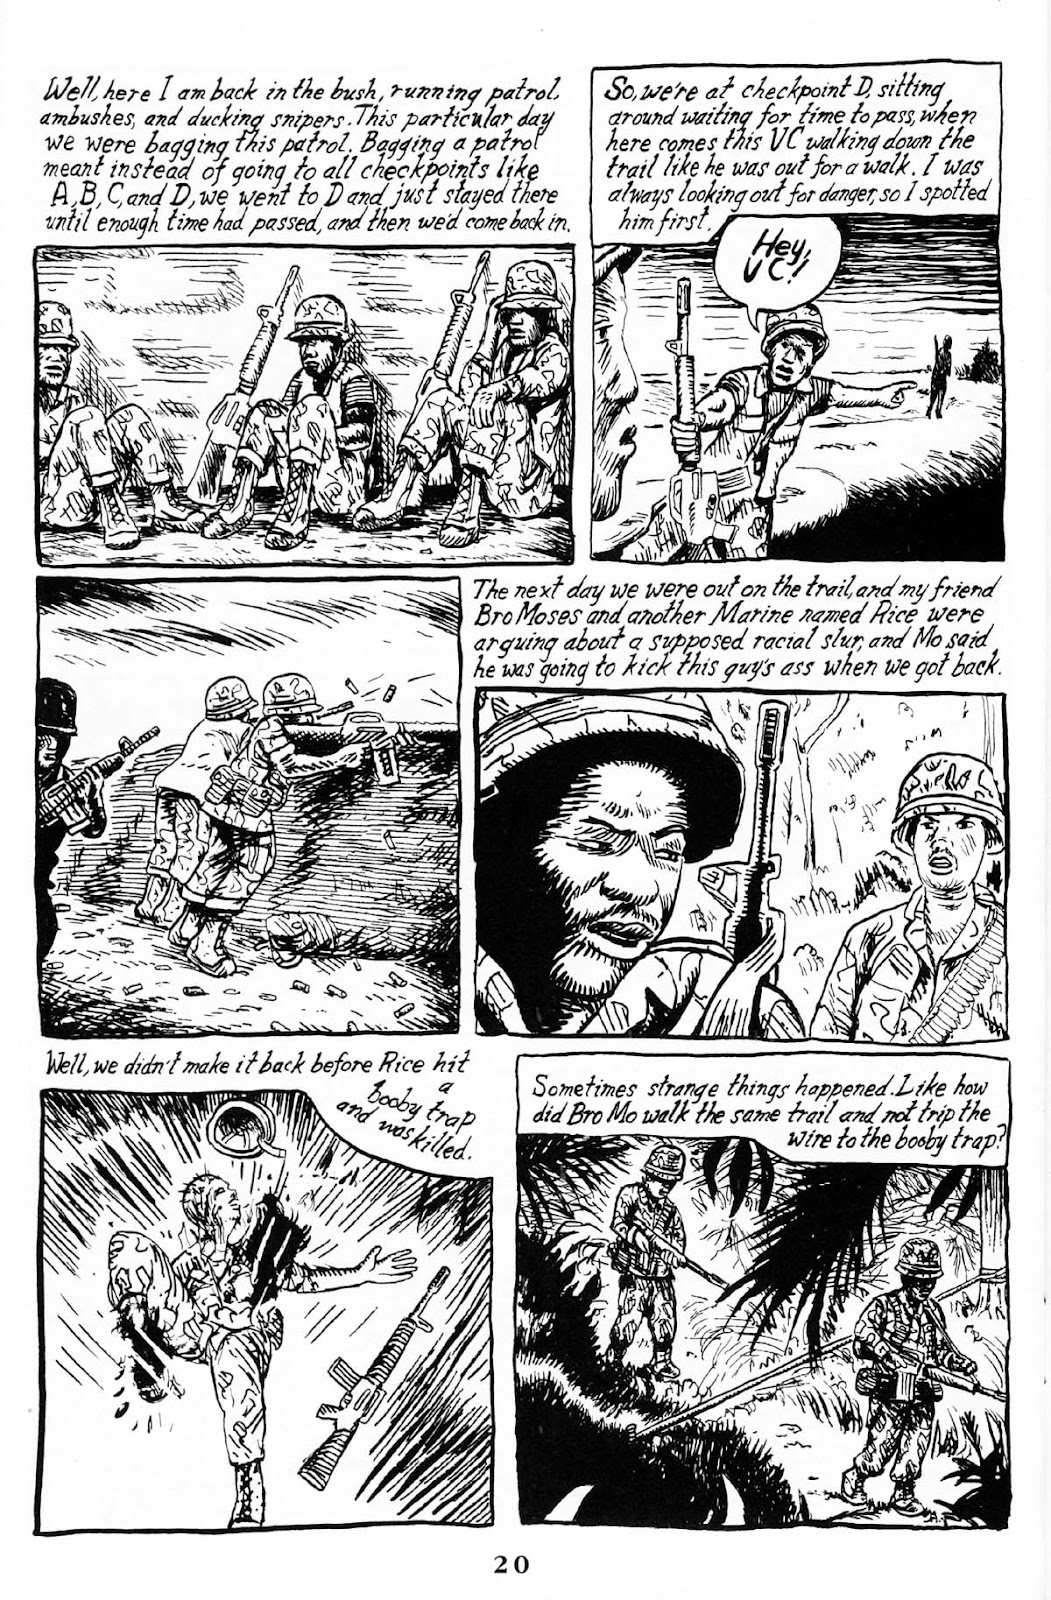 American Splendor: Unsung Hero issue 2 - Page 22